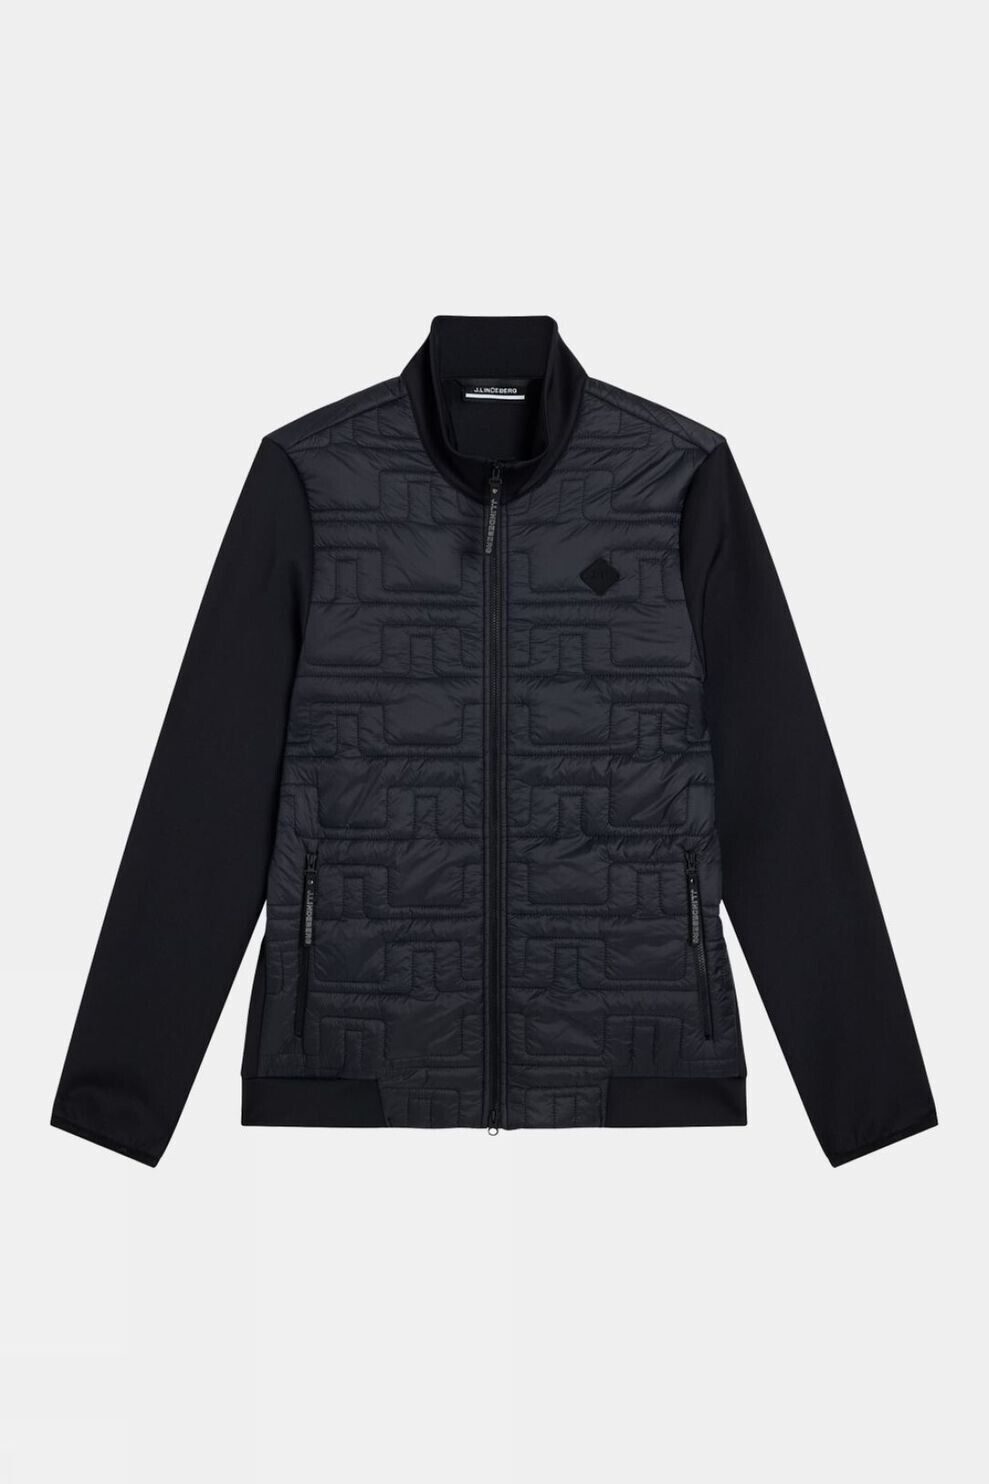 j lindeberg quilt hybrid jacket uk size xxl